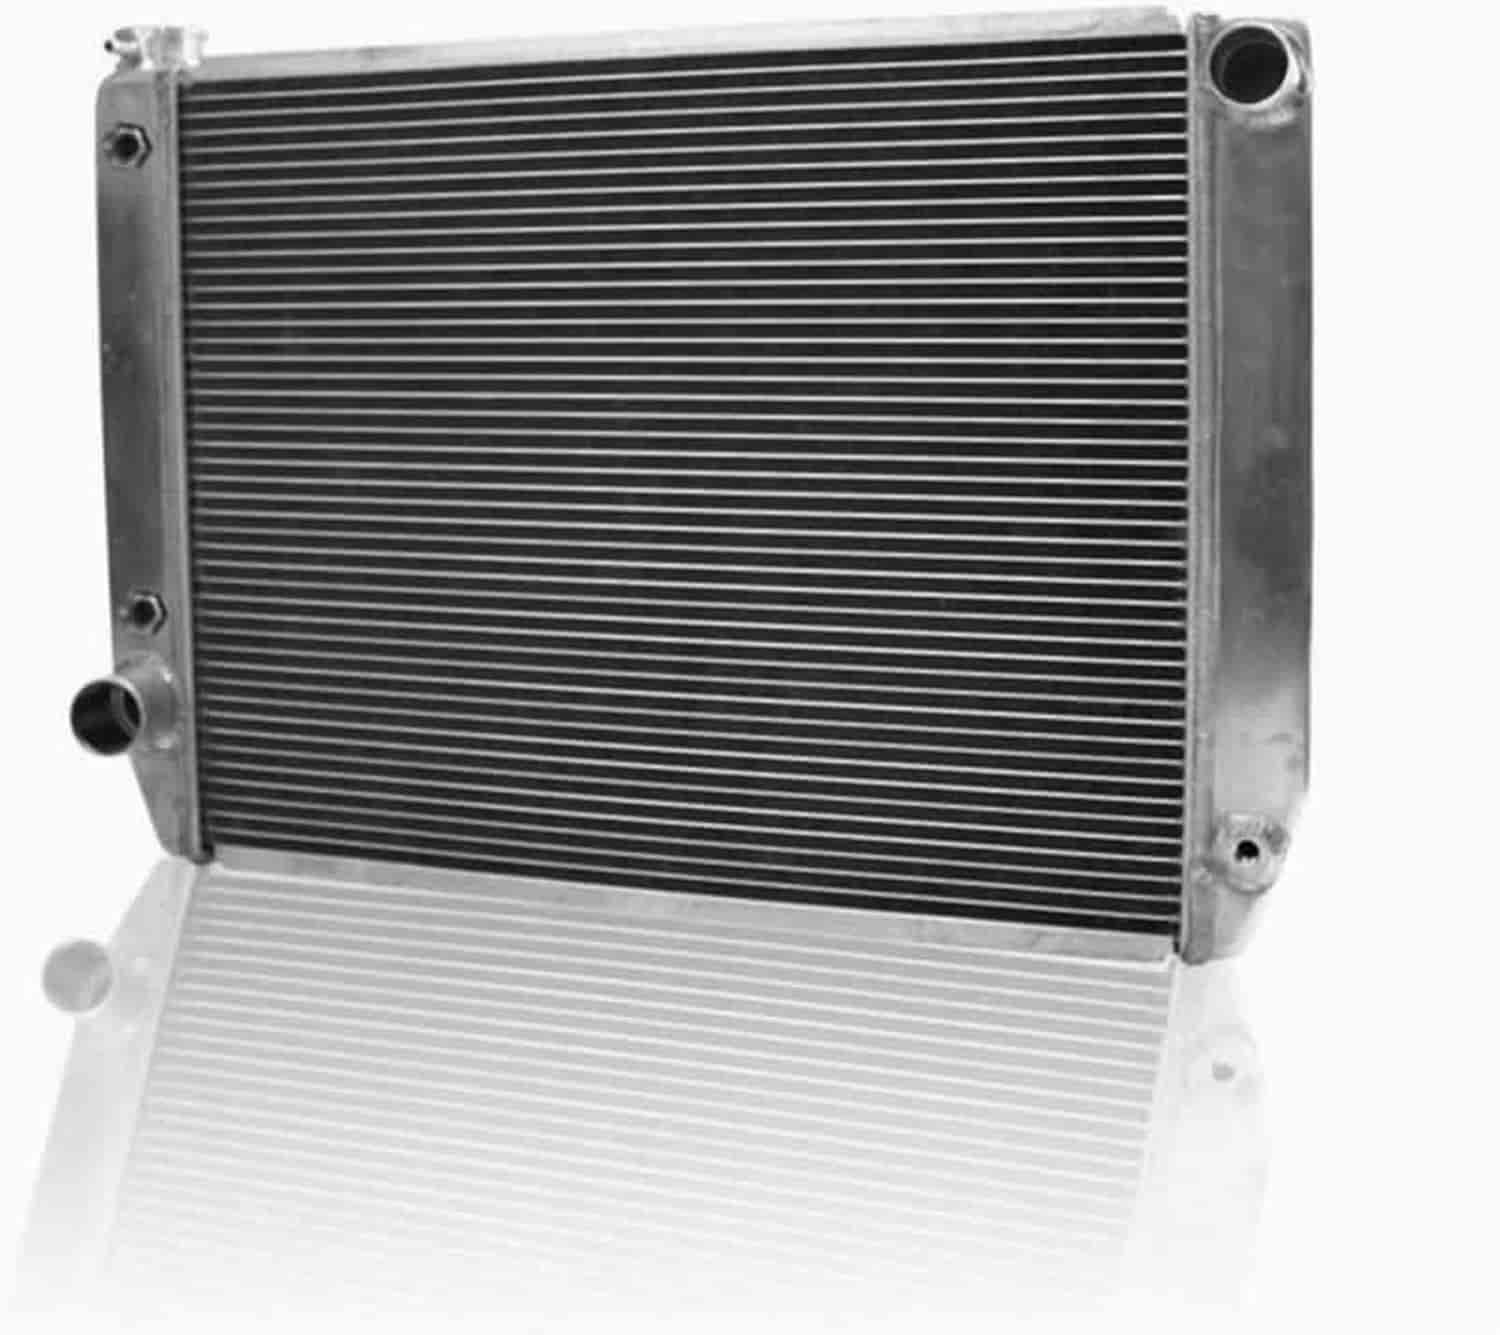 MegaCool Universal Fit Radiator Single Pass Crossflow Design 27.50" x 19" with Transmission Cooler